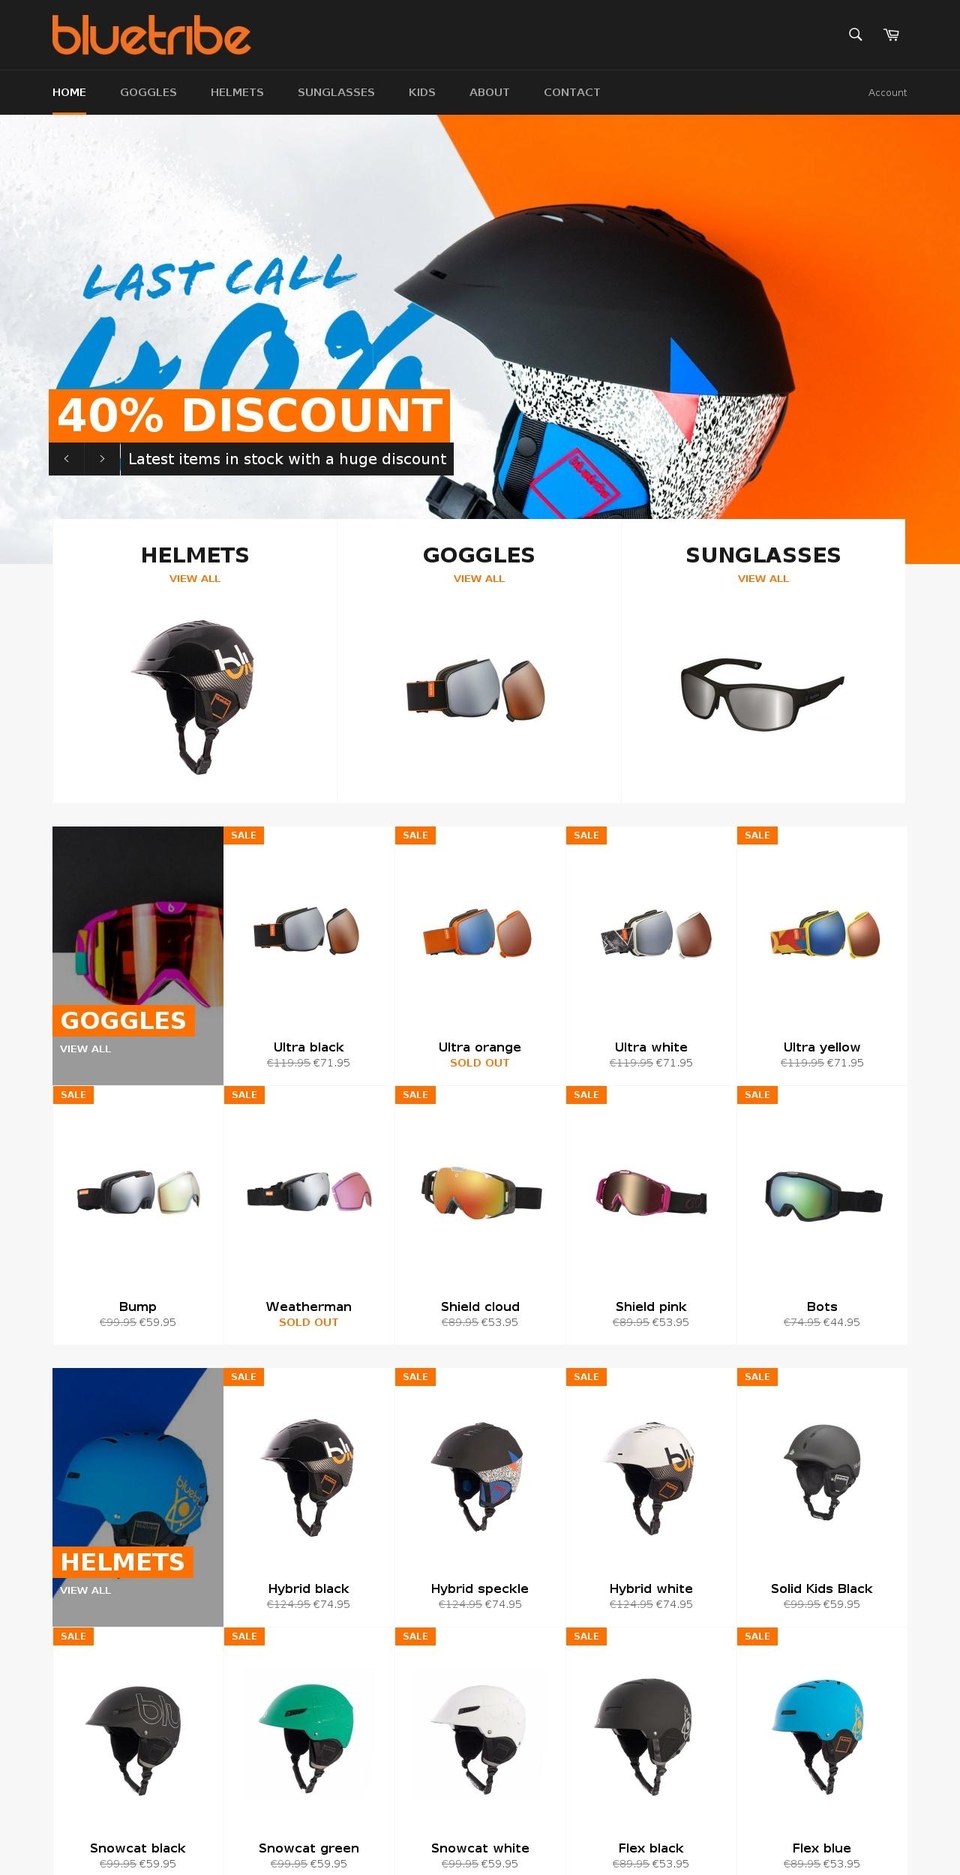 bluetribe.eu shopify website screenshot